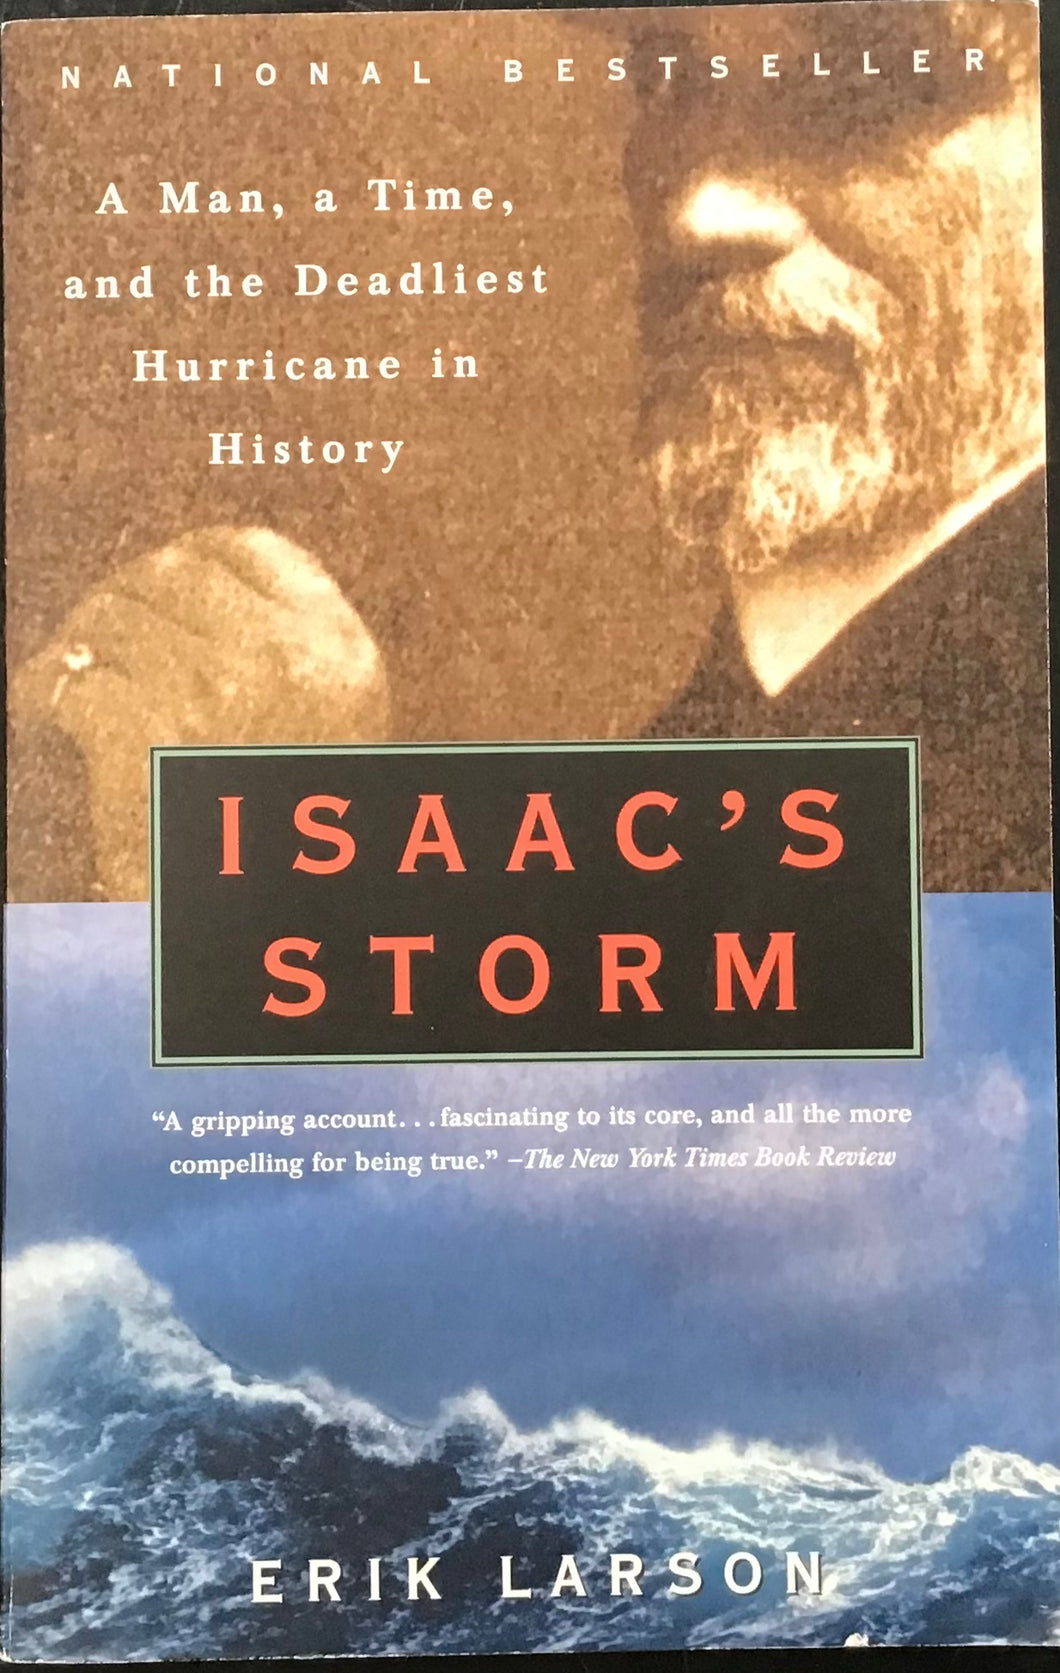 Isaac’s Storm, Erik Larson